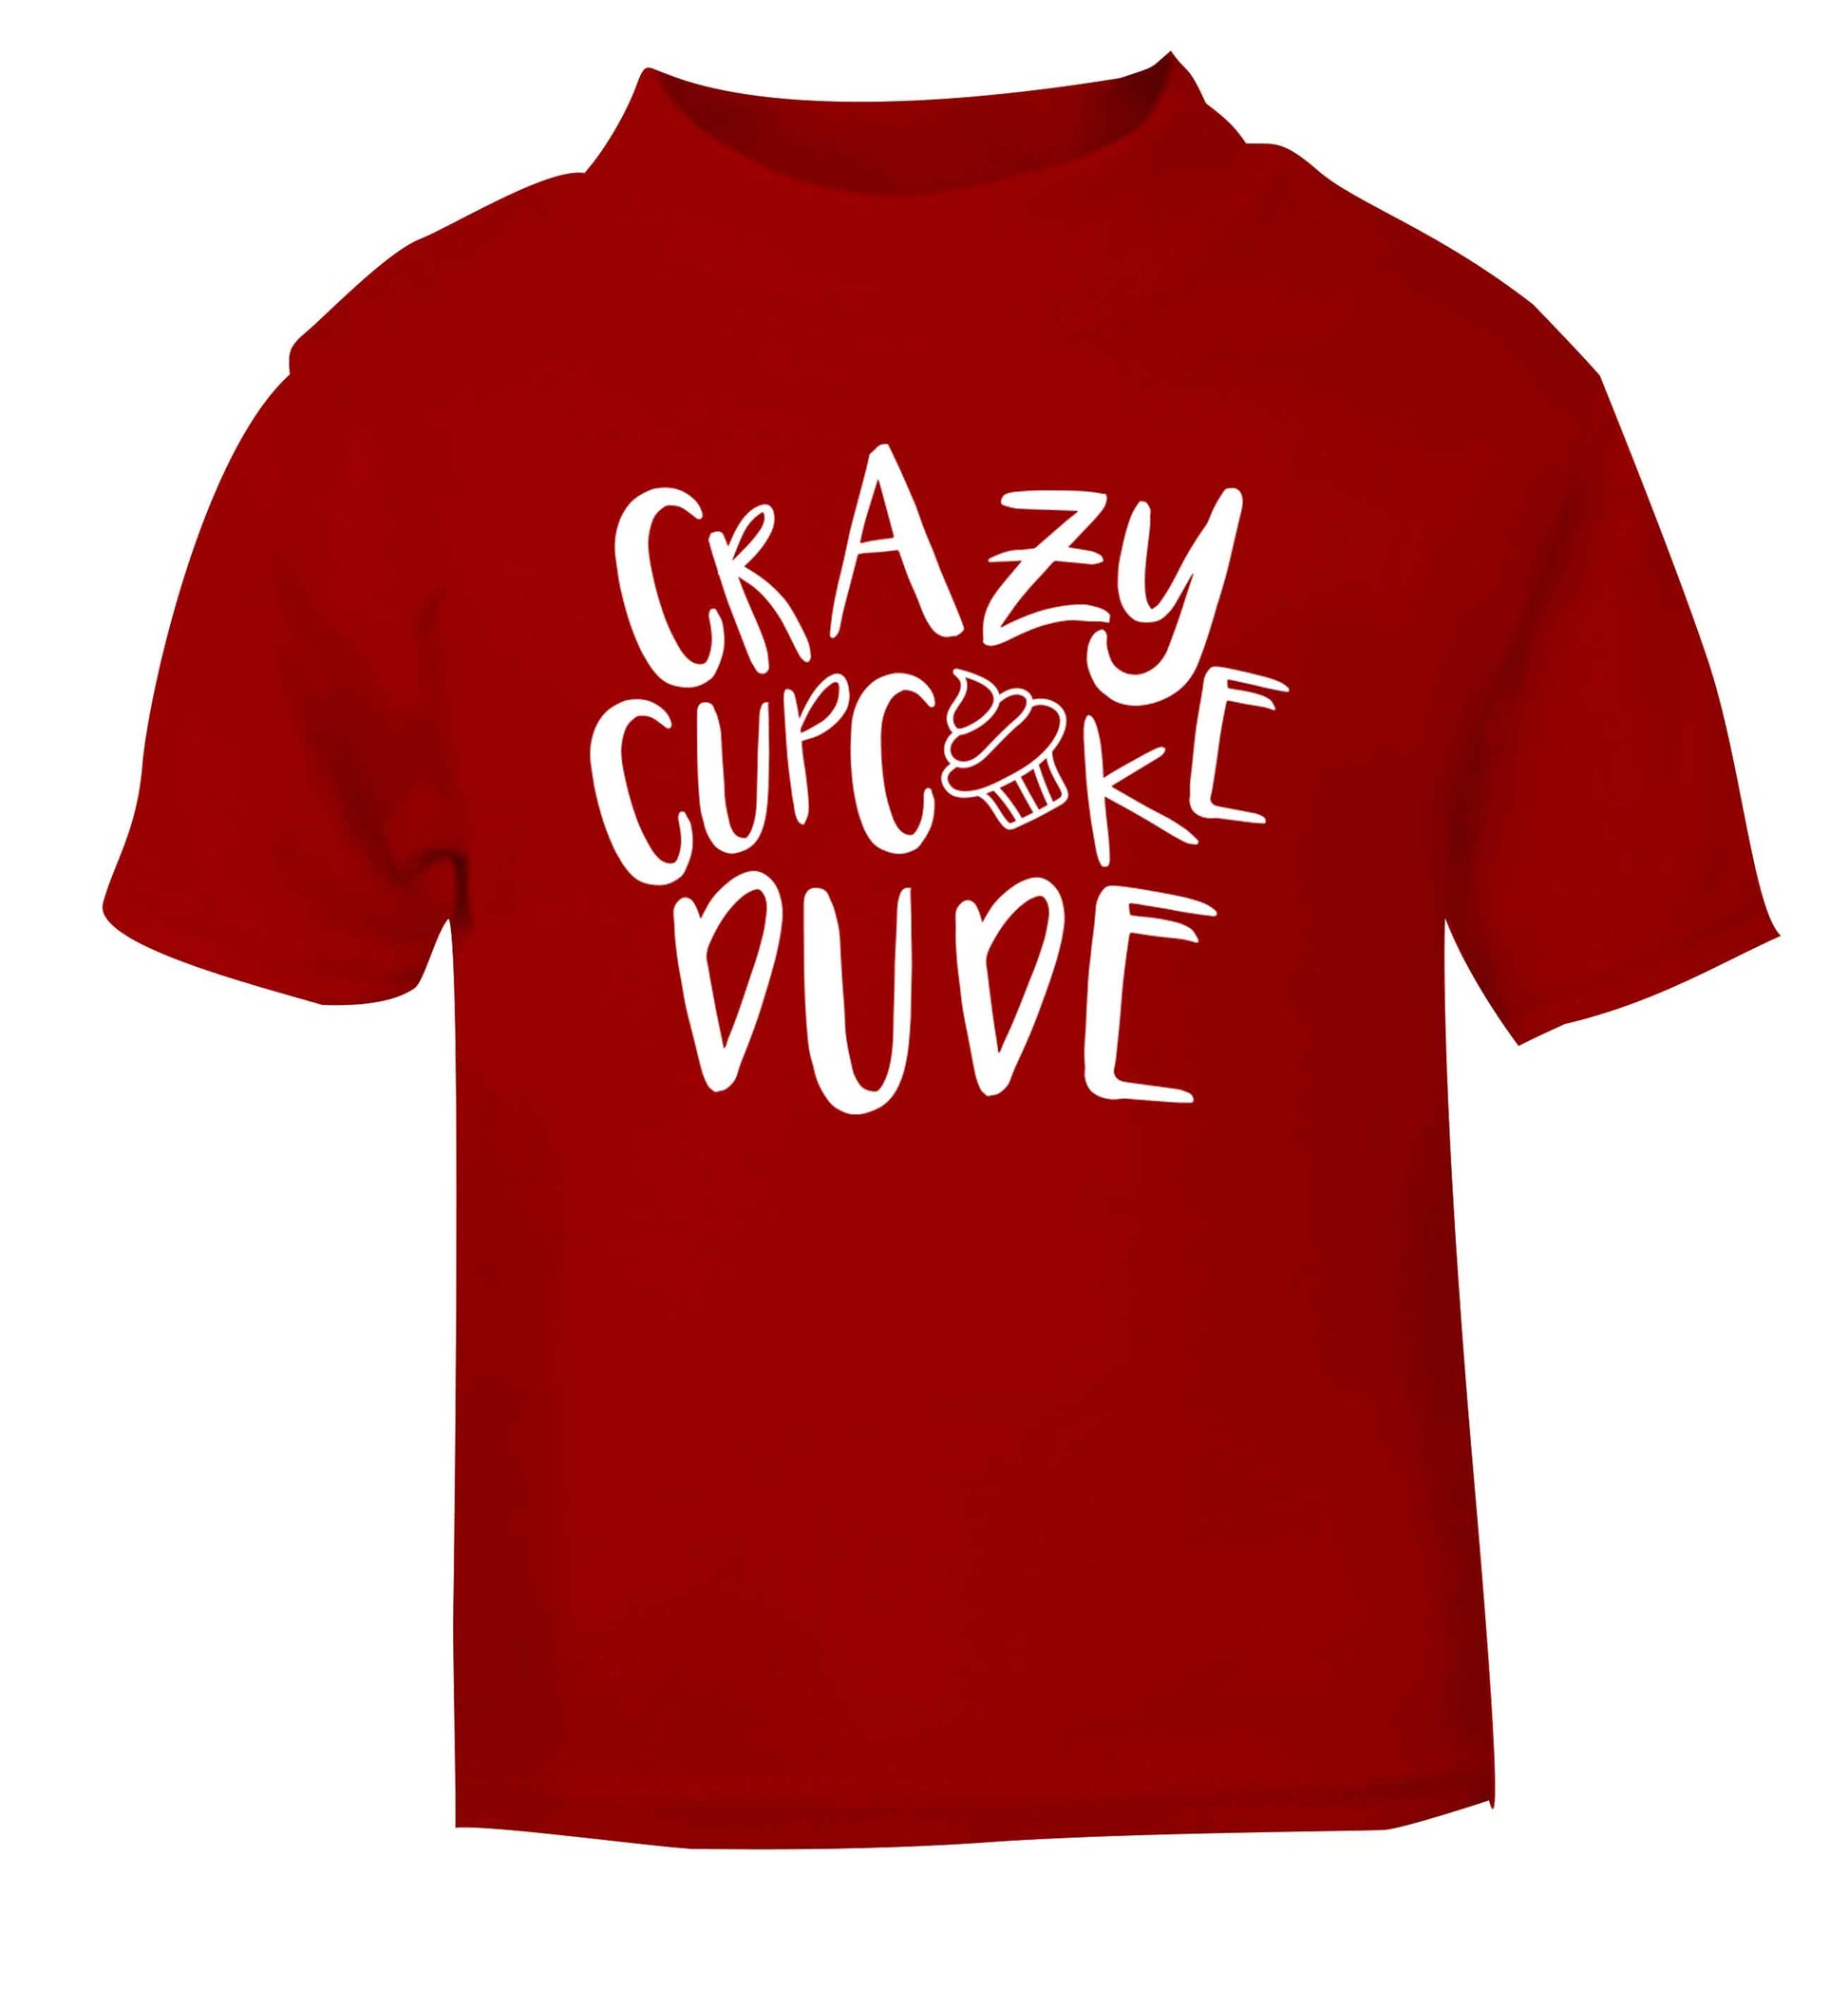 Crazy cupcake dude red Baby Toddler Tshirt 2 Years